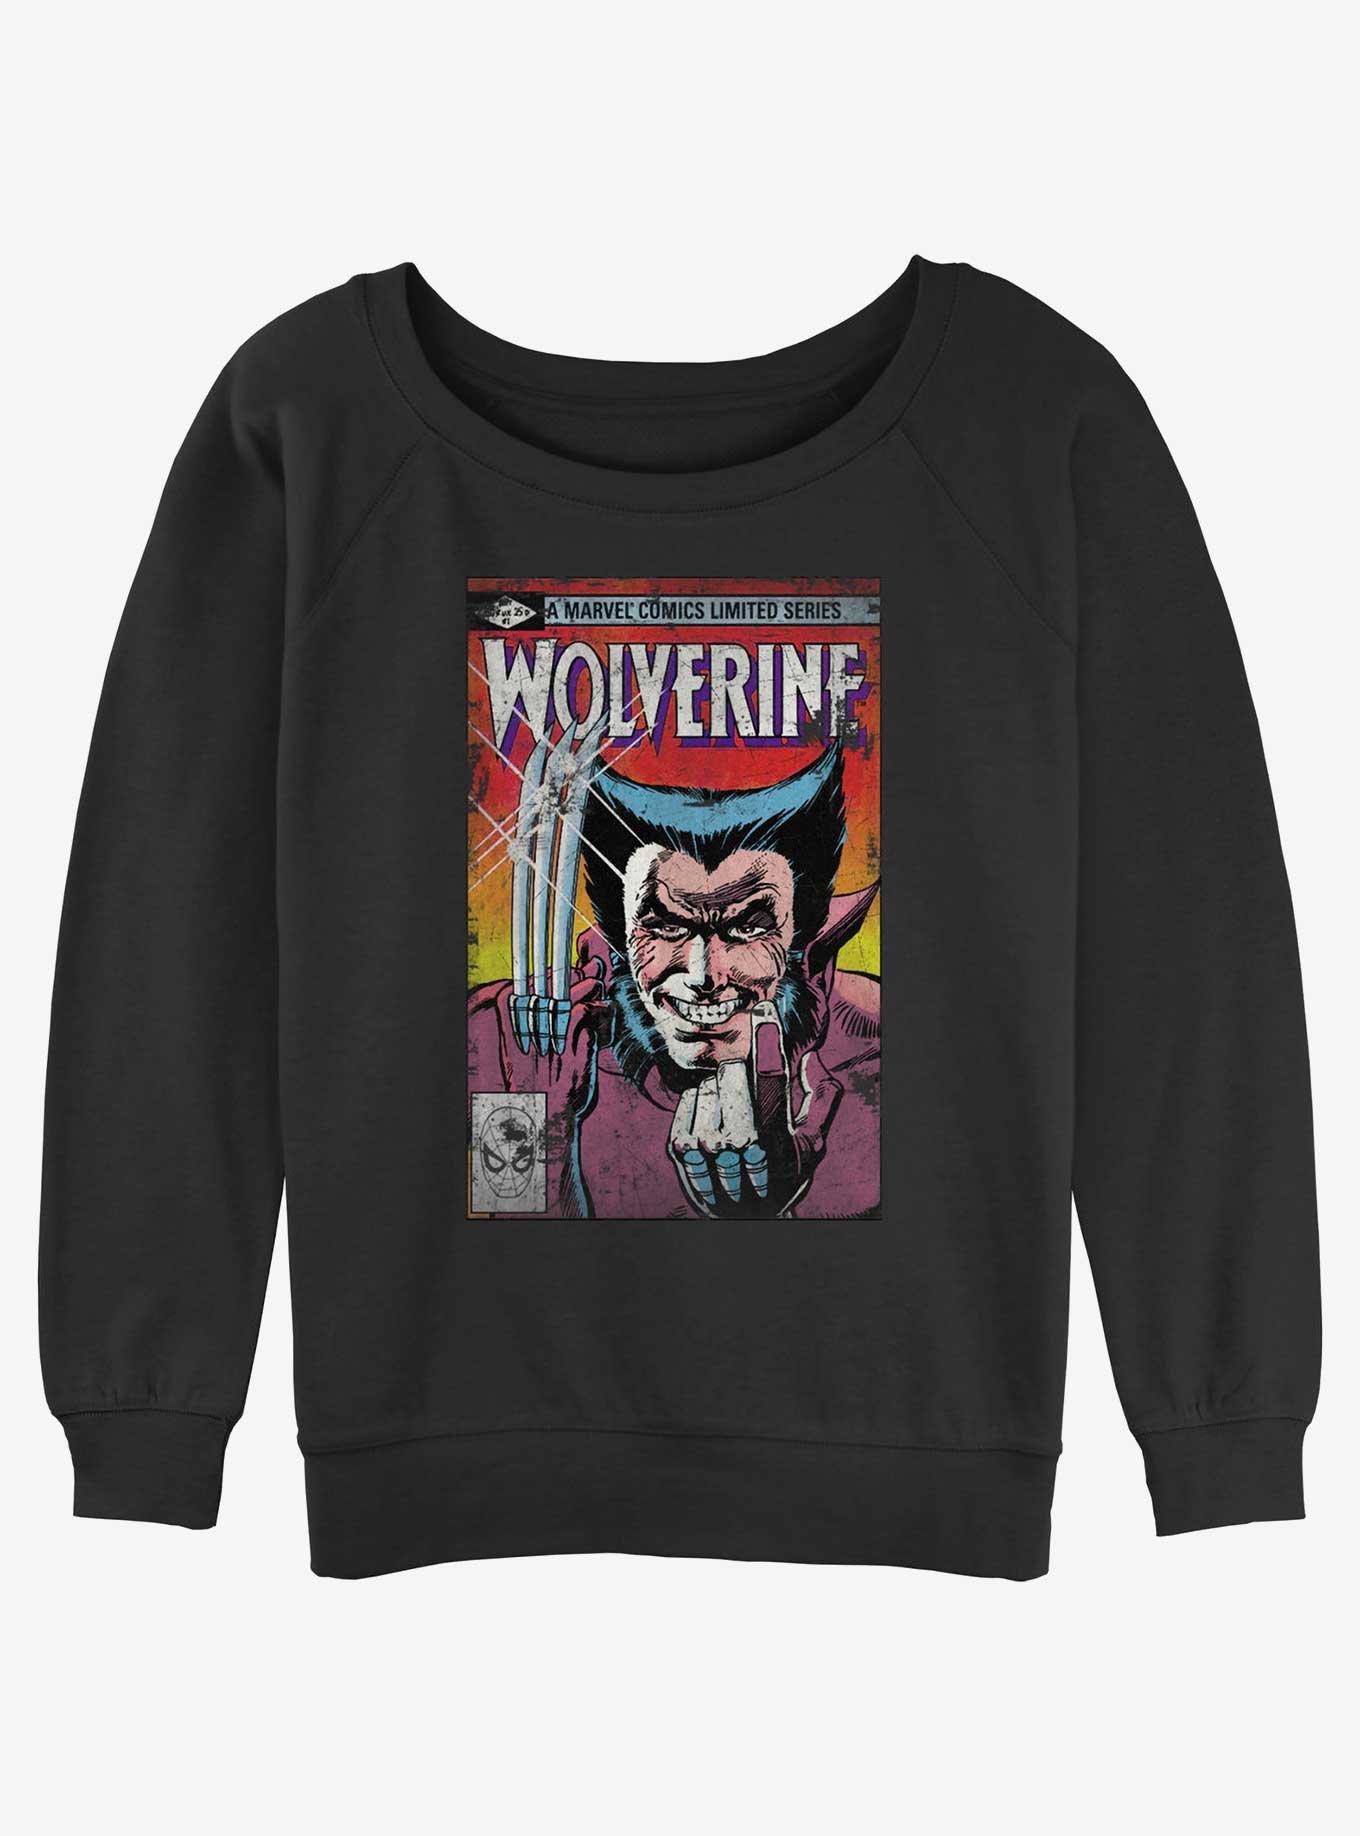 Wolverine Comic Cover Girls Slouchy Sweatshirt, BLACK, hi-res